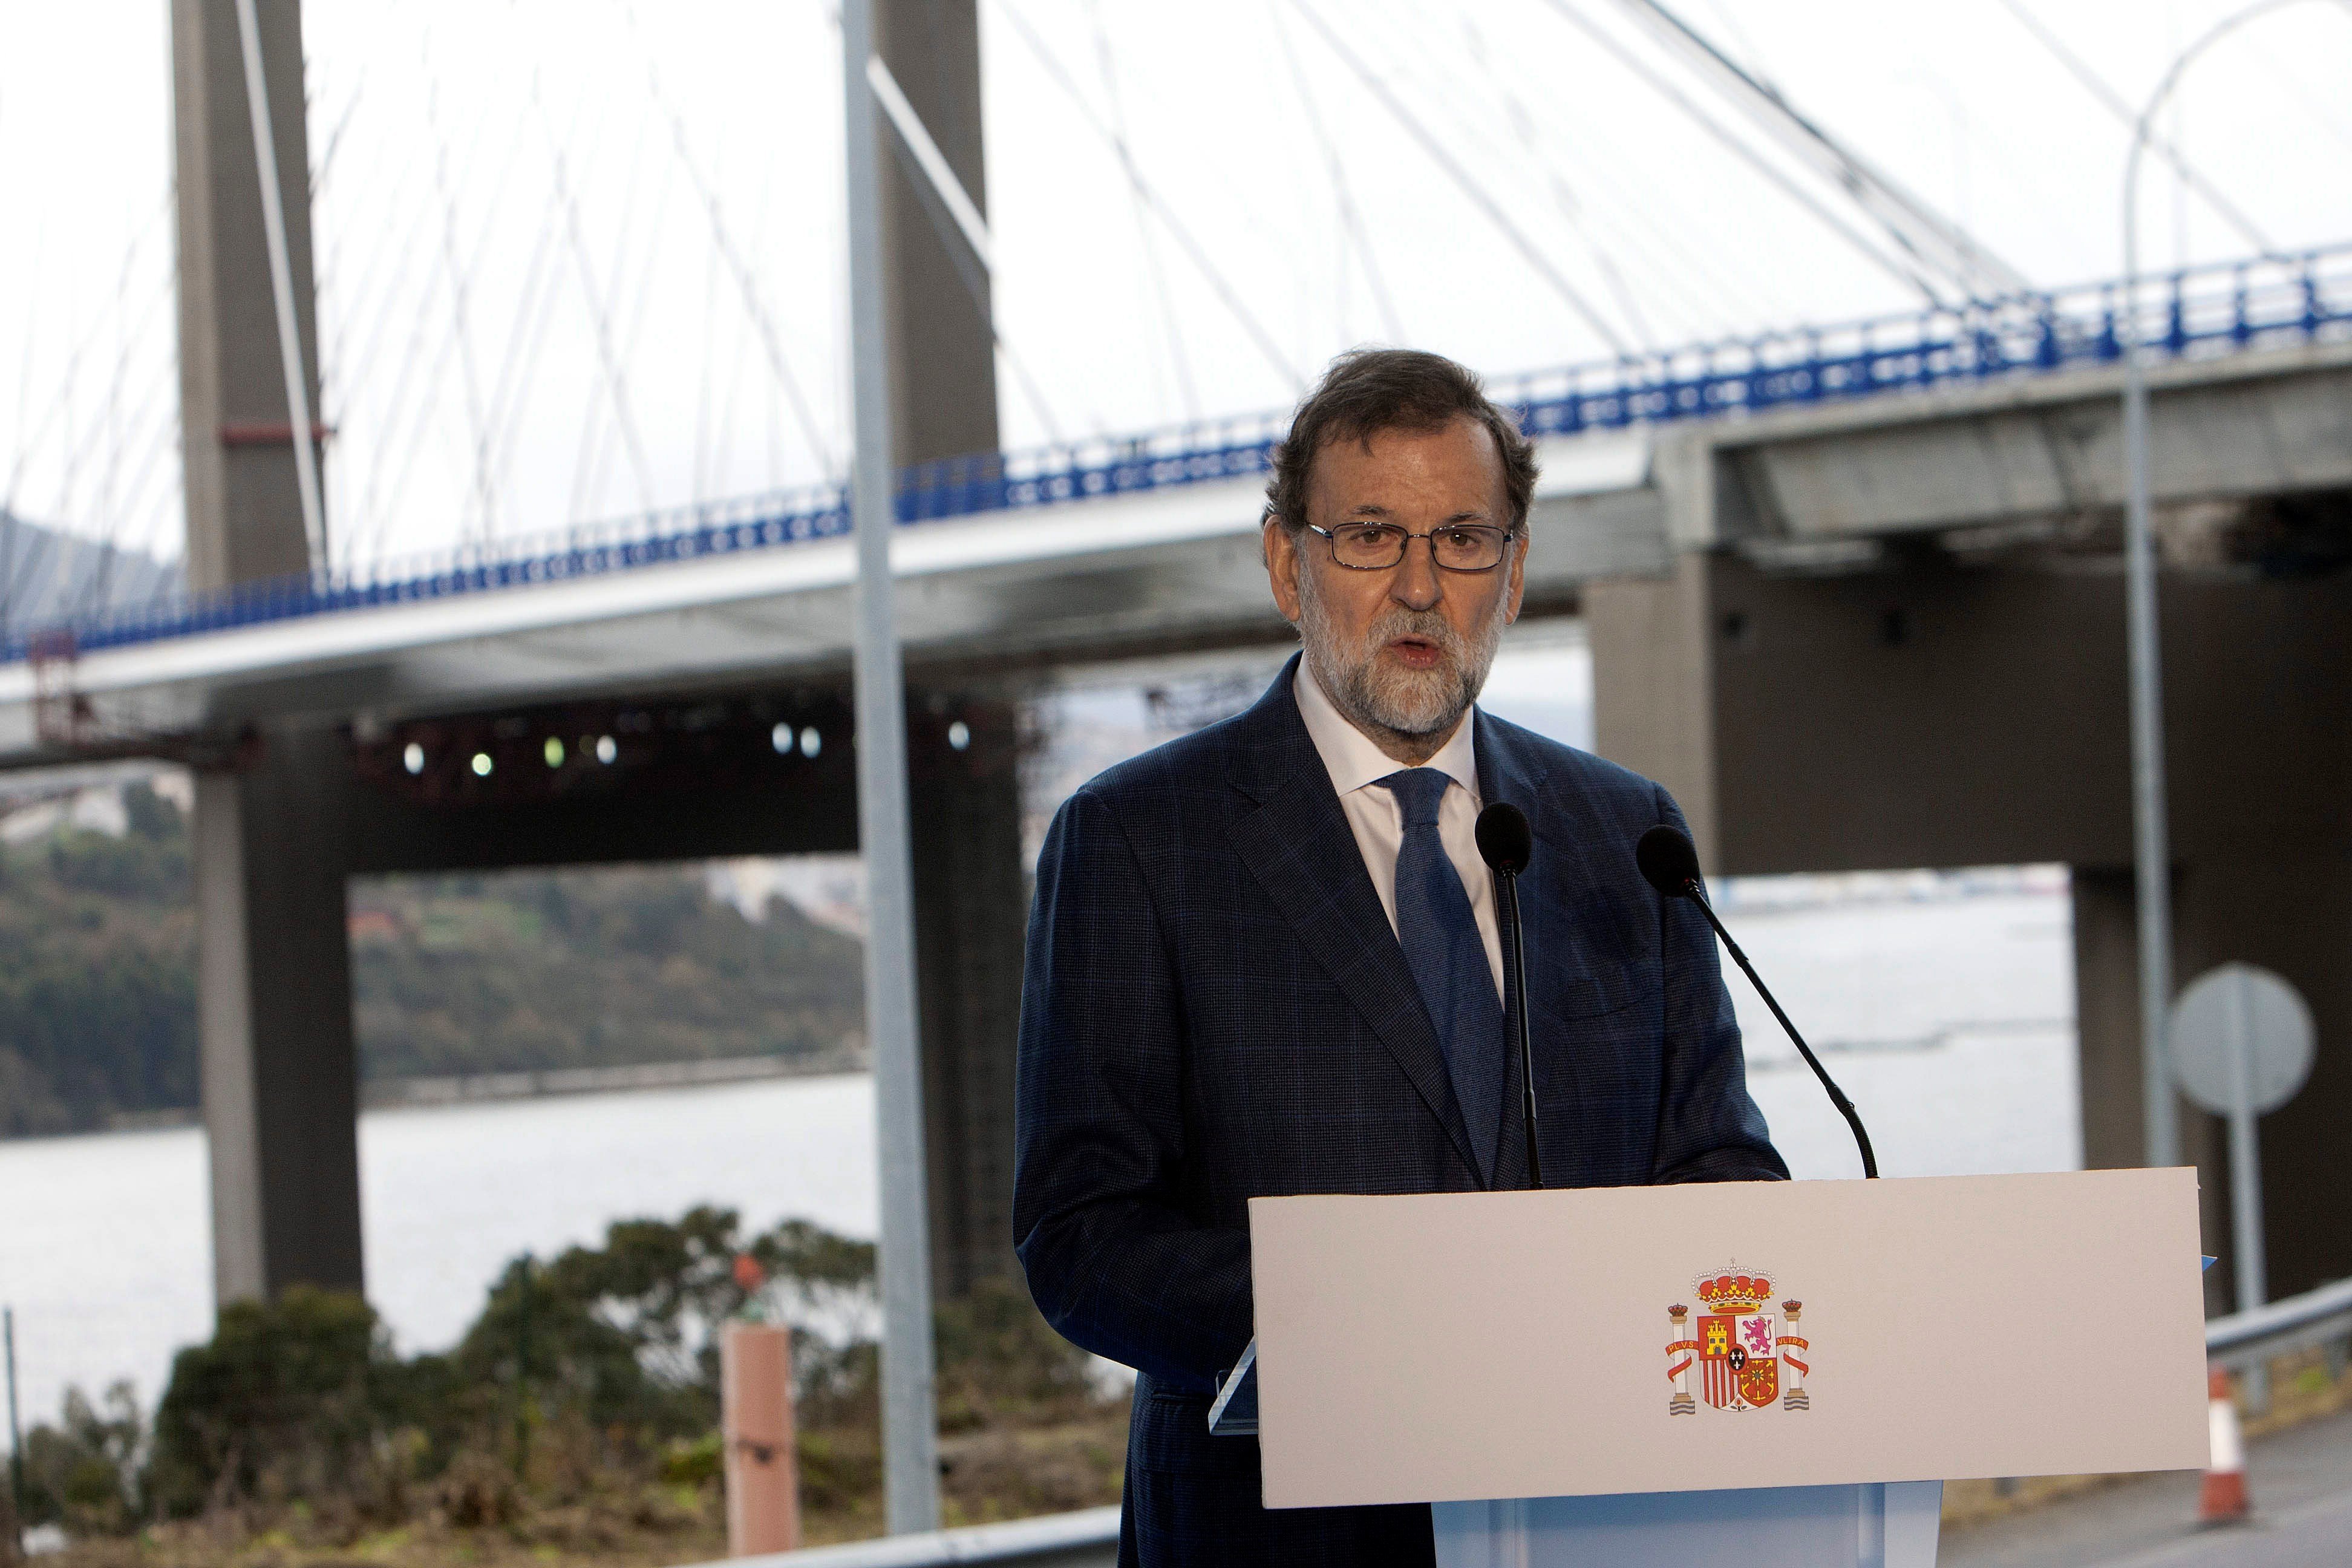 Vídeo: L'últim lapsus de Rajoy: ara desitja un bon "2016"